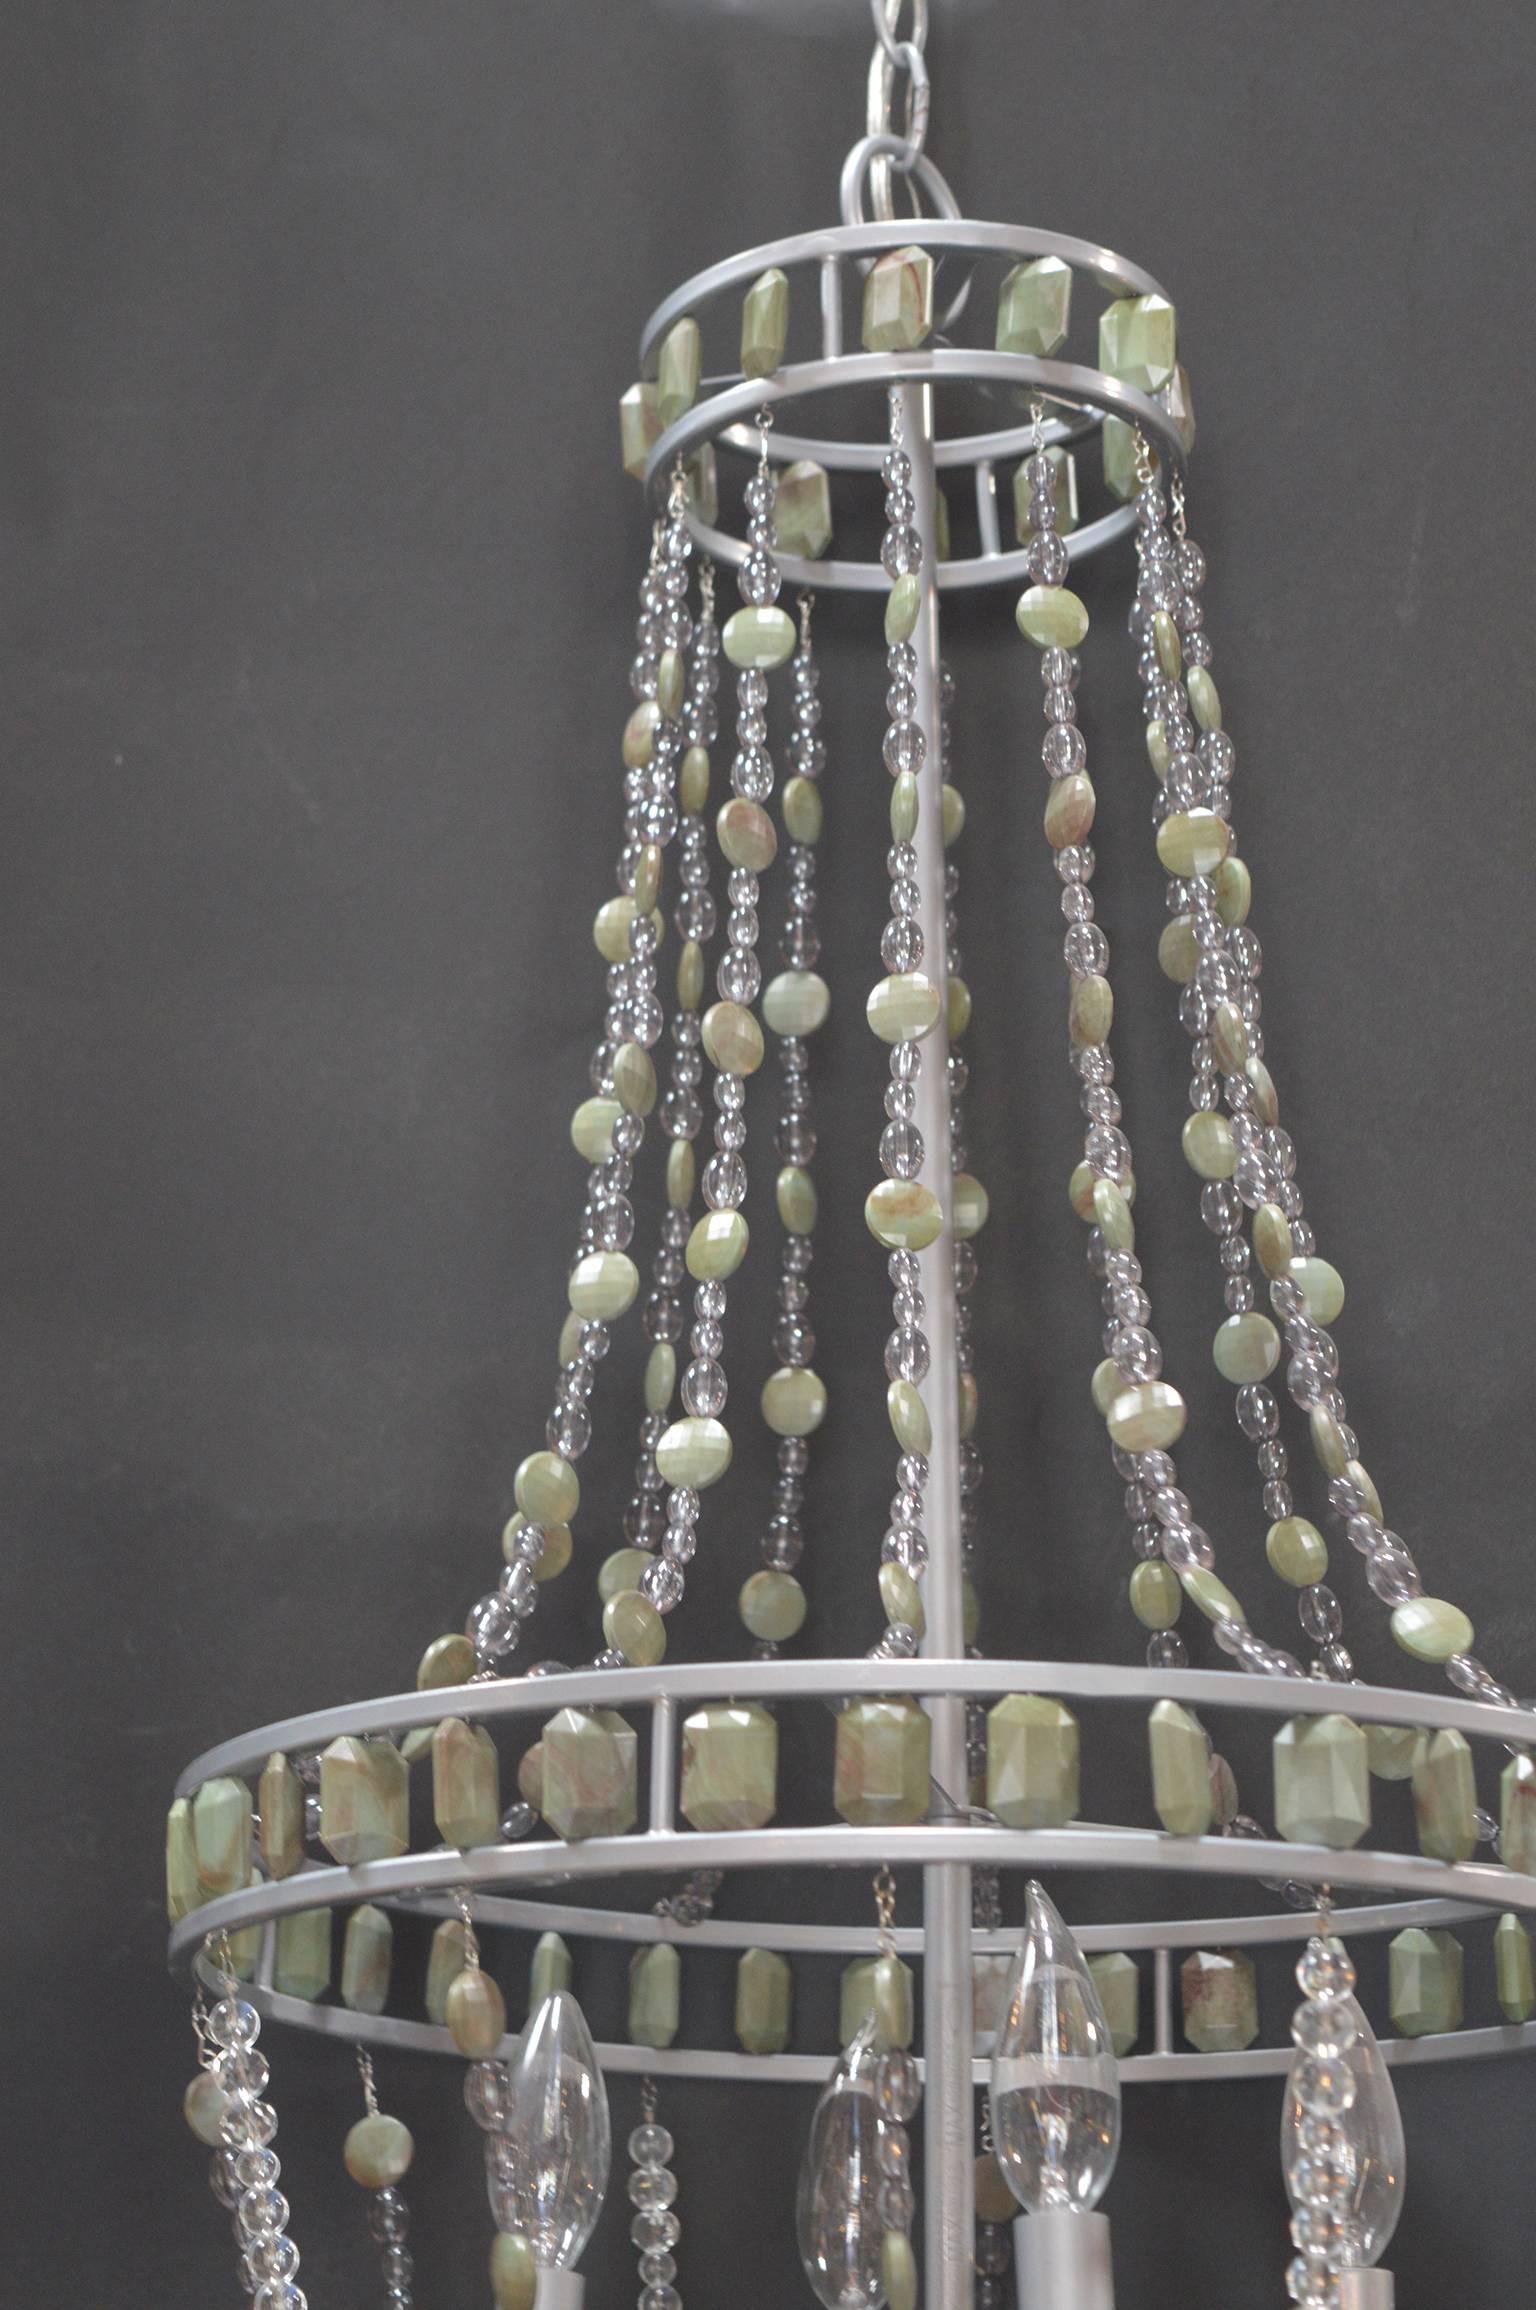 Hollywood Regency chandelier with green gemstones.